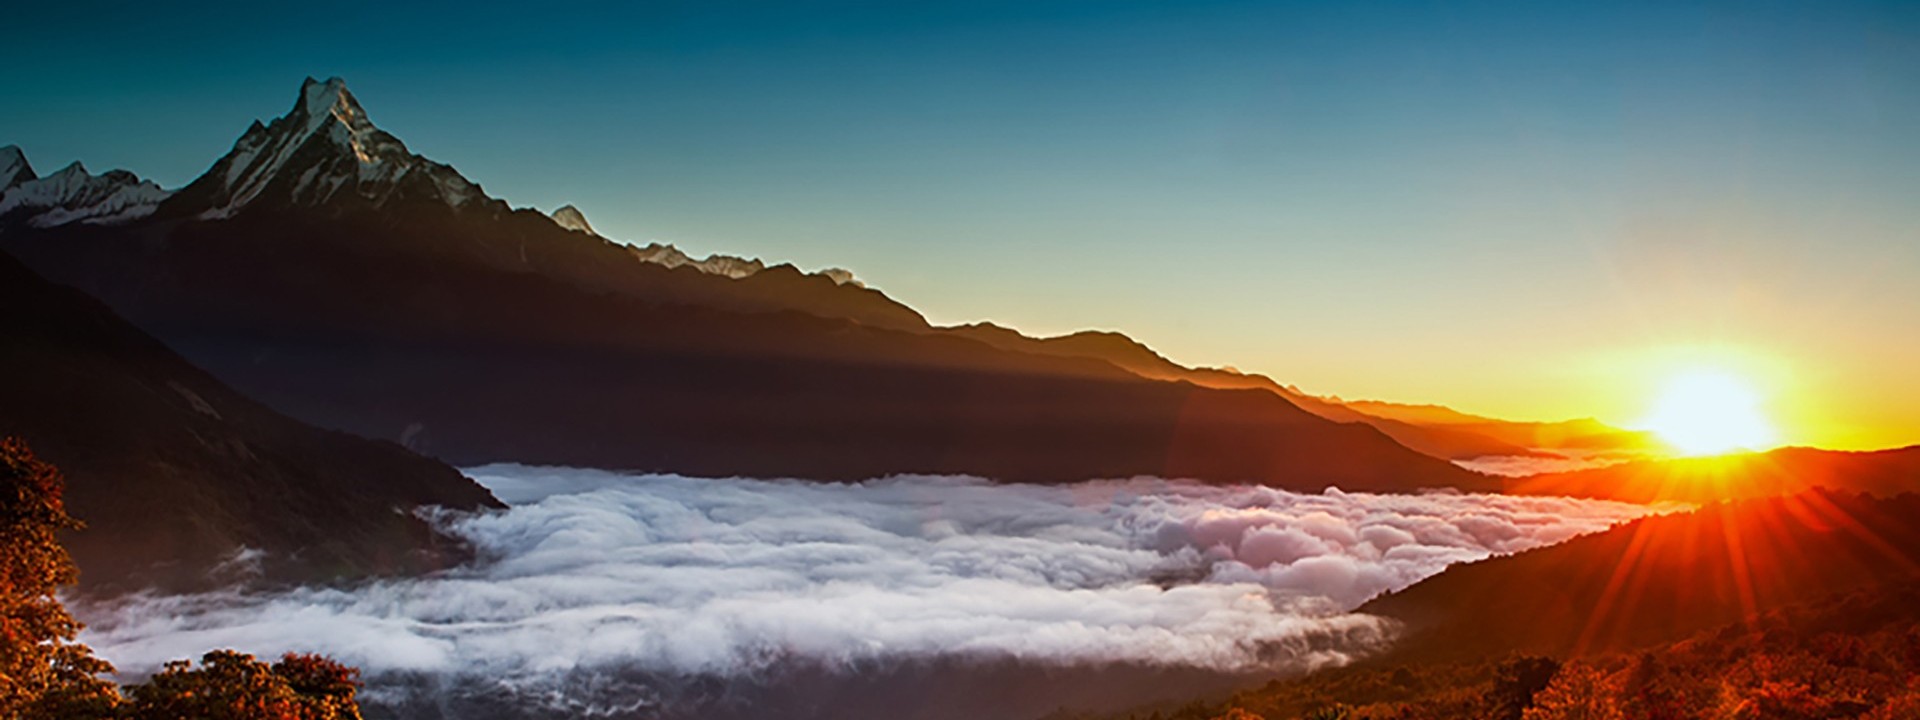 Annapurna Sunrise View Trek